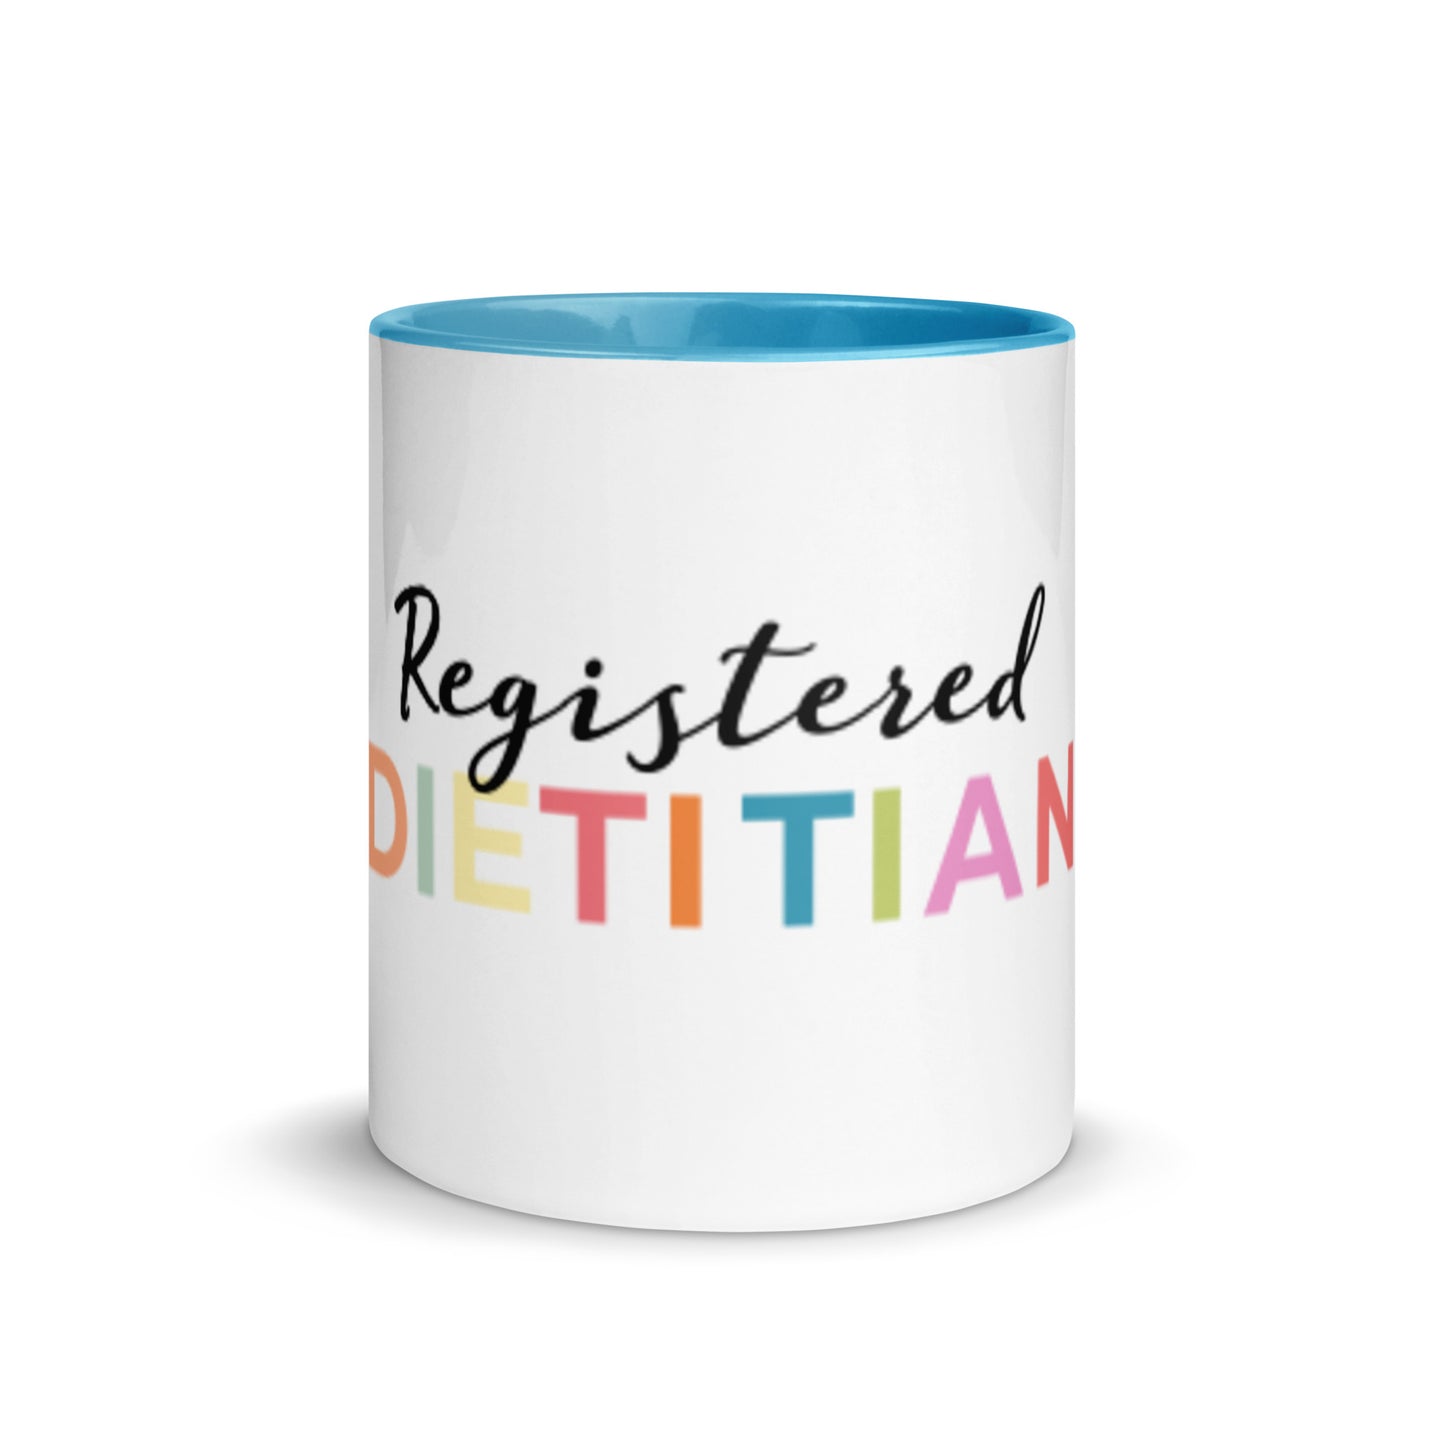 Registered Dietitian Mug with Color Inside